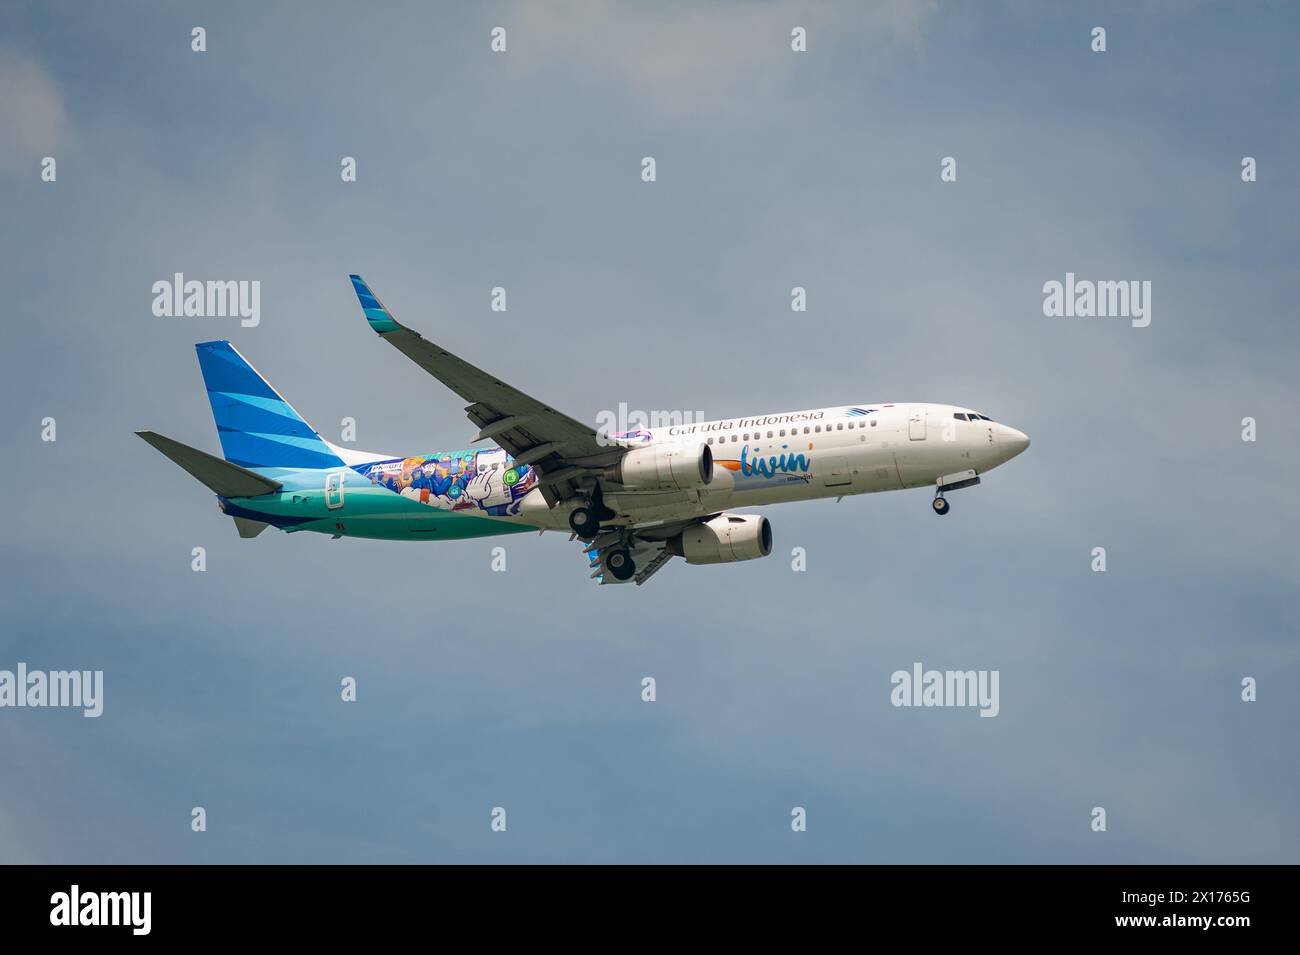 15.07.2023, Singapore, Republic of Singapore, Asia - A Garuda Indonesia Boeing 737-800 passenger jet approaches Changi Airport for landing. Stock Photo